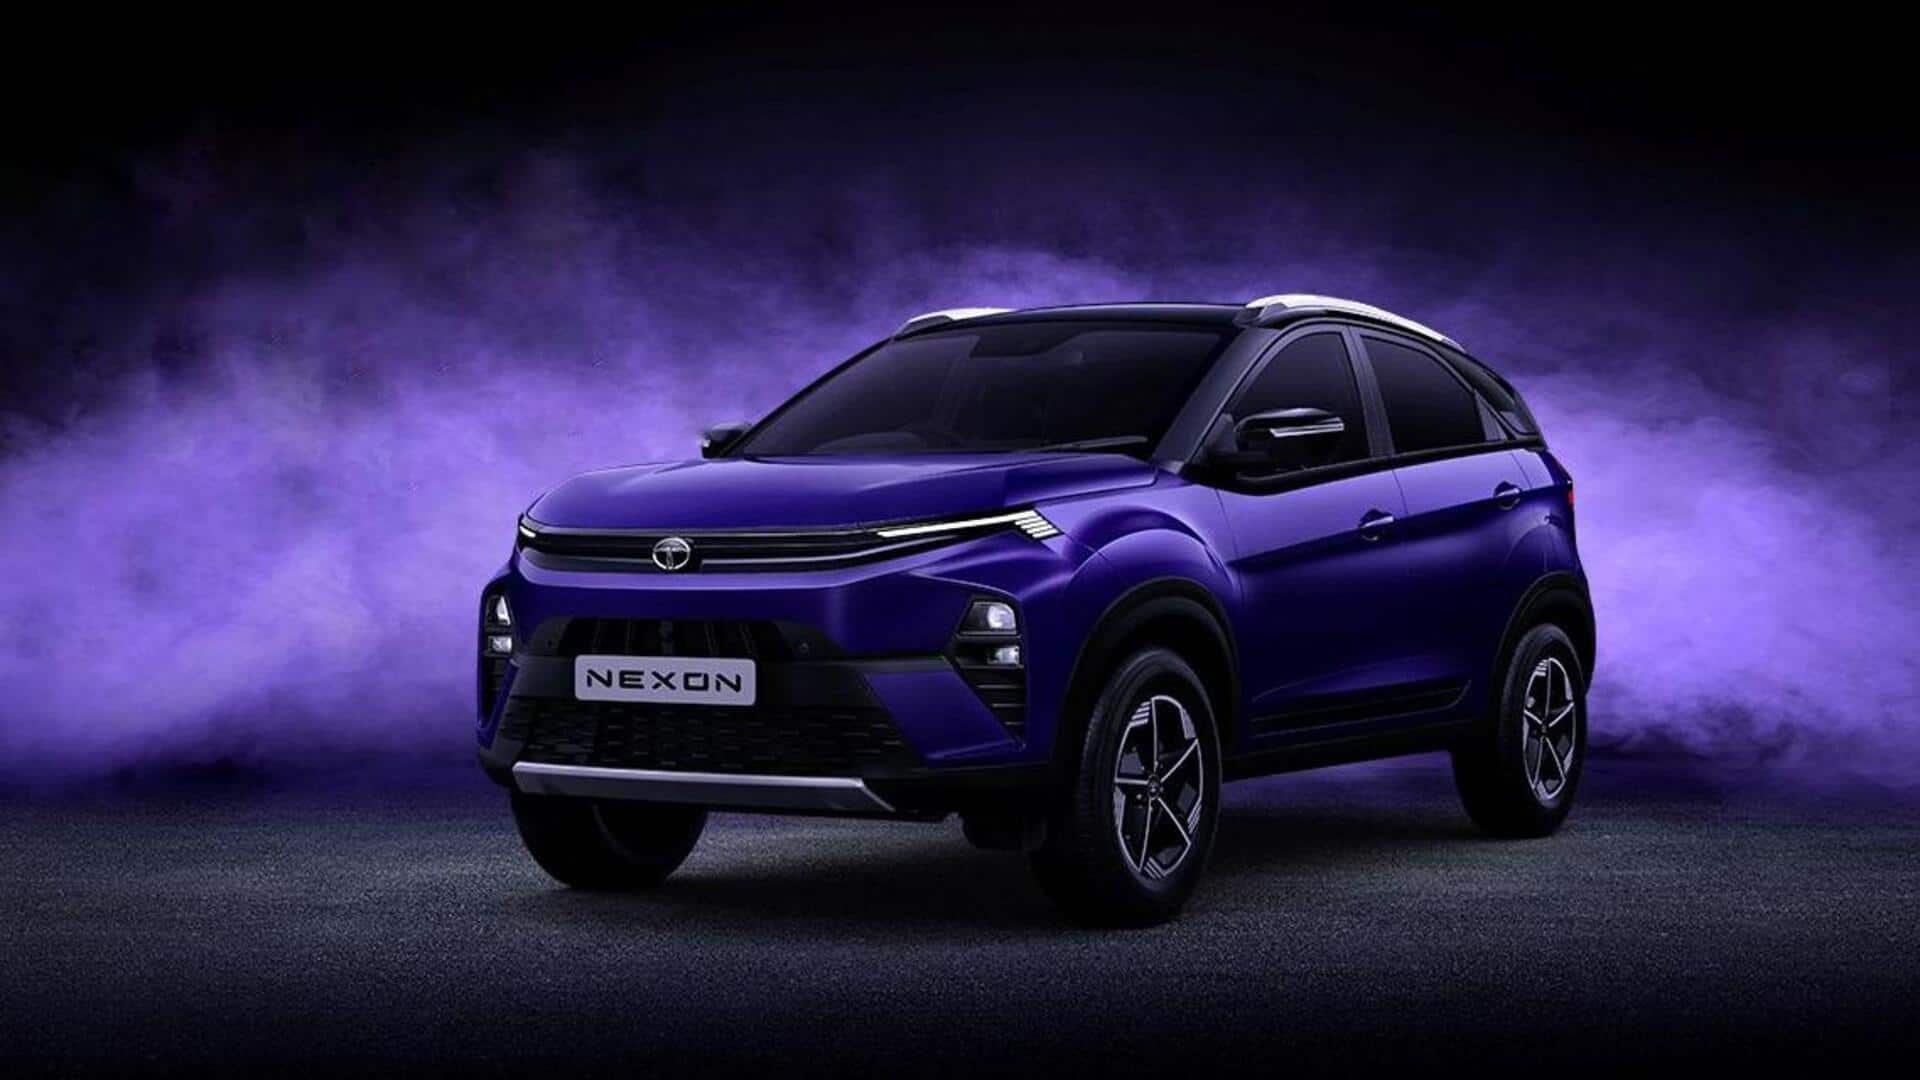 Tata Nexon (facelift) showcased in India: Check its top rivals